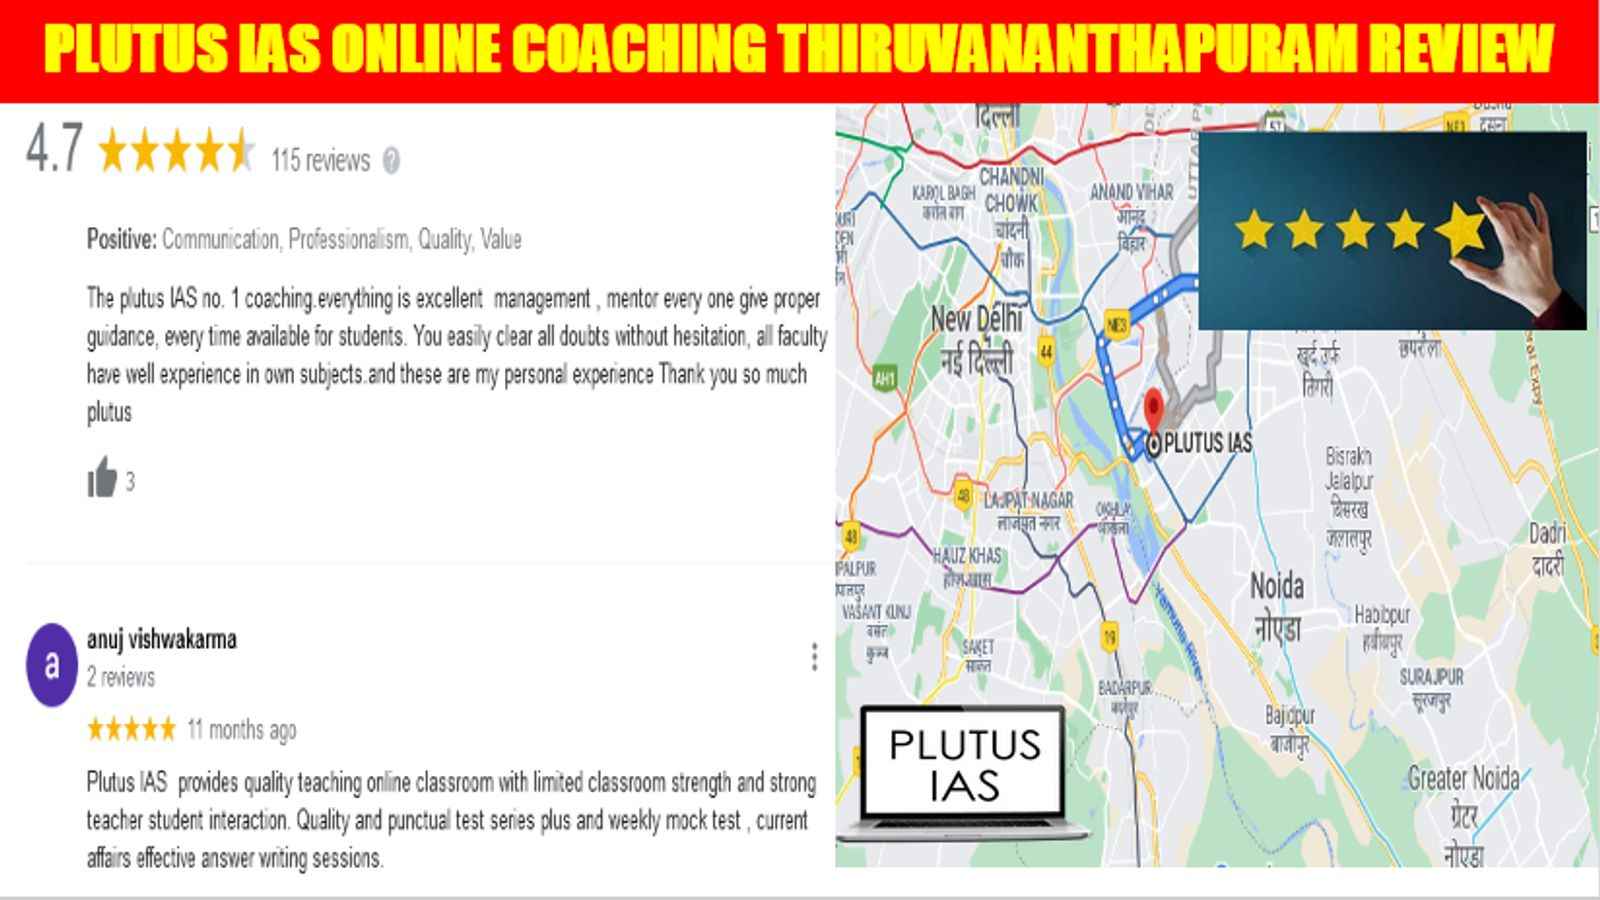 Plutus IAS Online Coaching Thiruvananthapuram Review